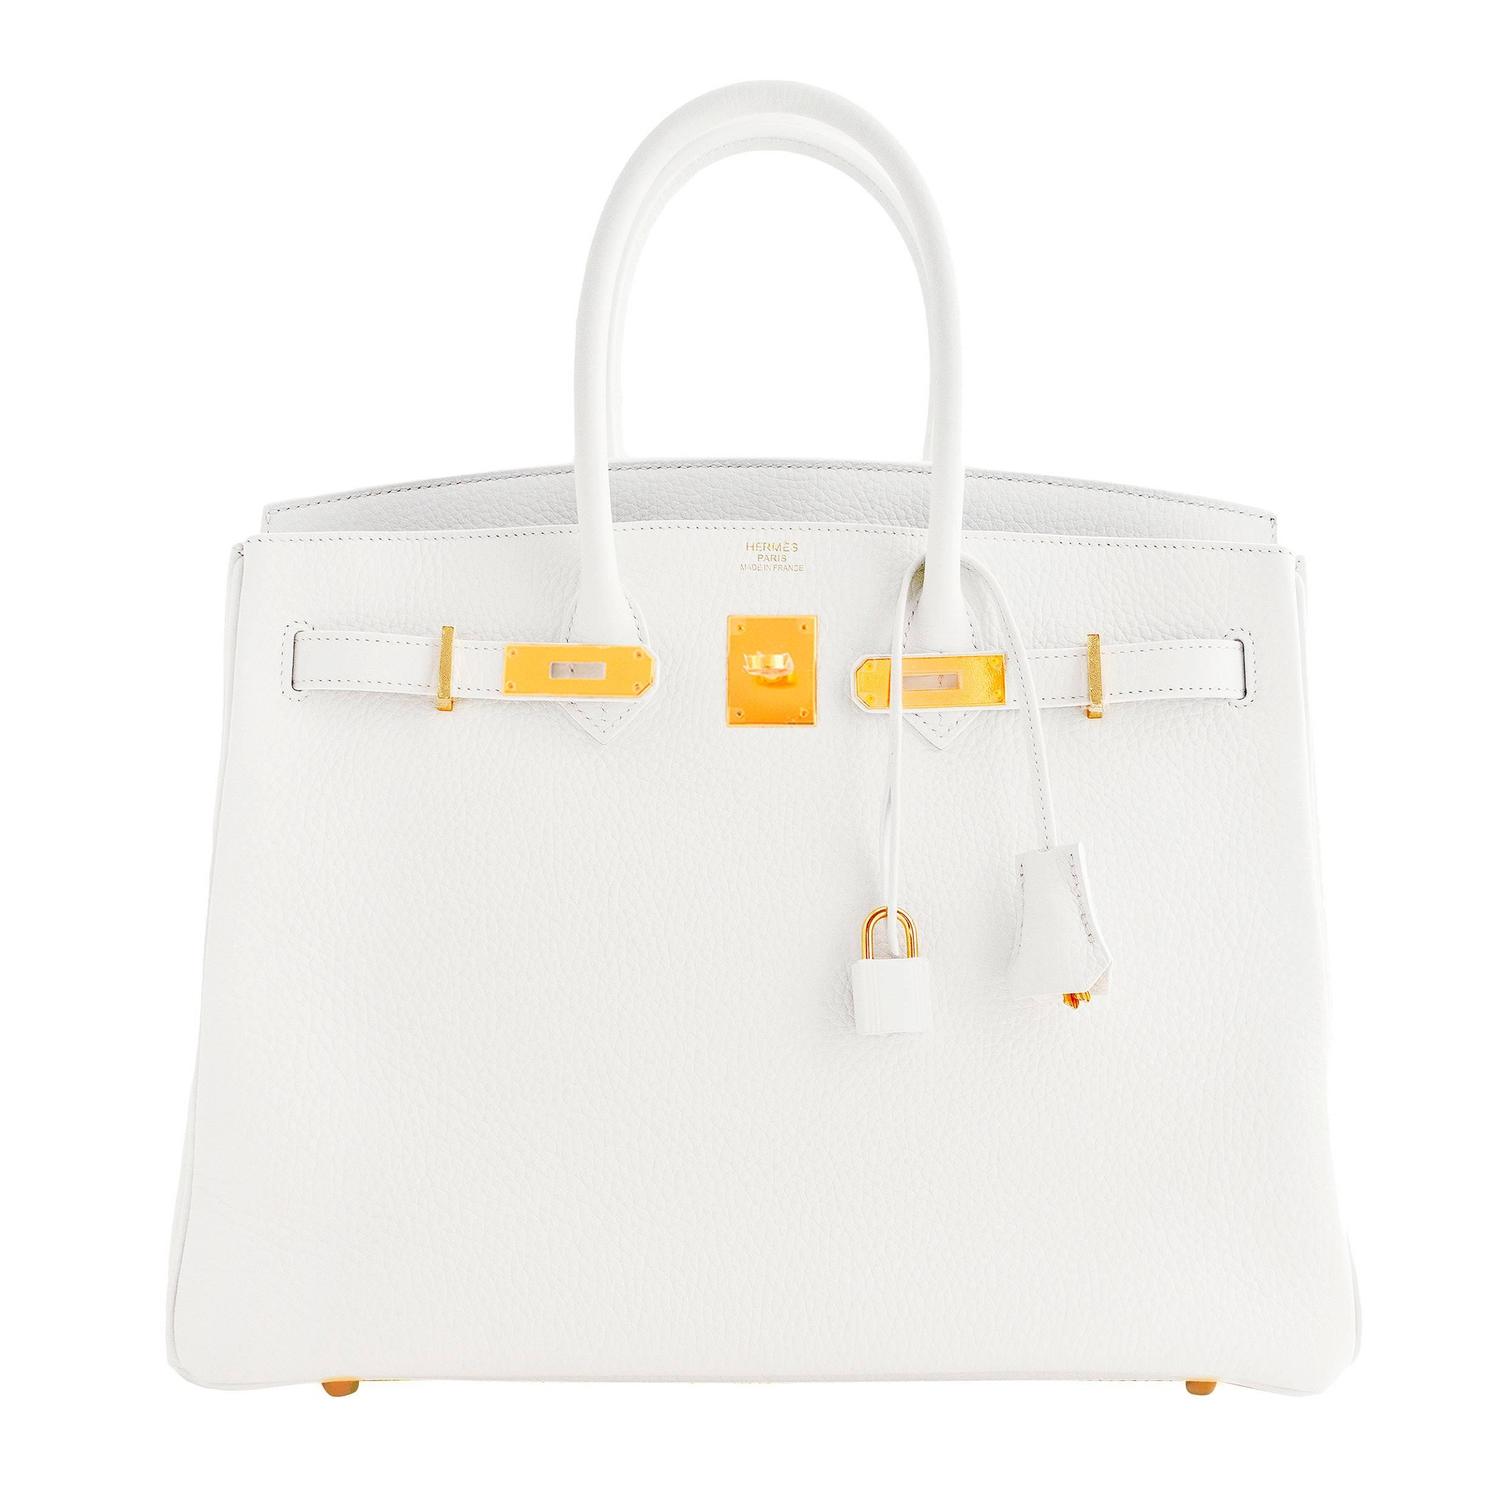 fake hermes birkin handbags - Hermes White Gold 35cm Birkin GHW Superb Summer 2016 Super New! at ...